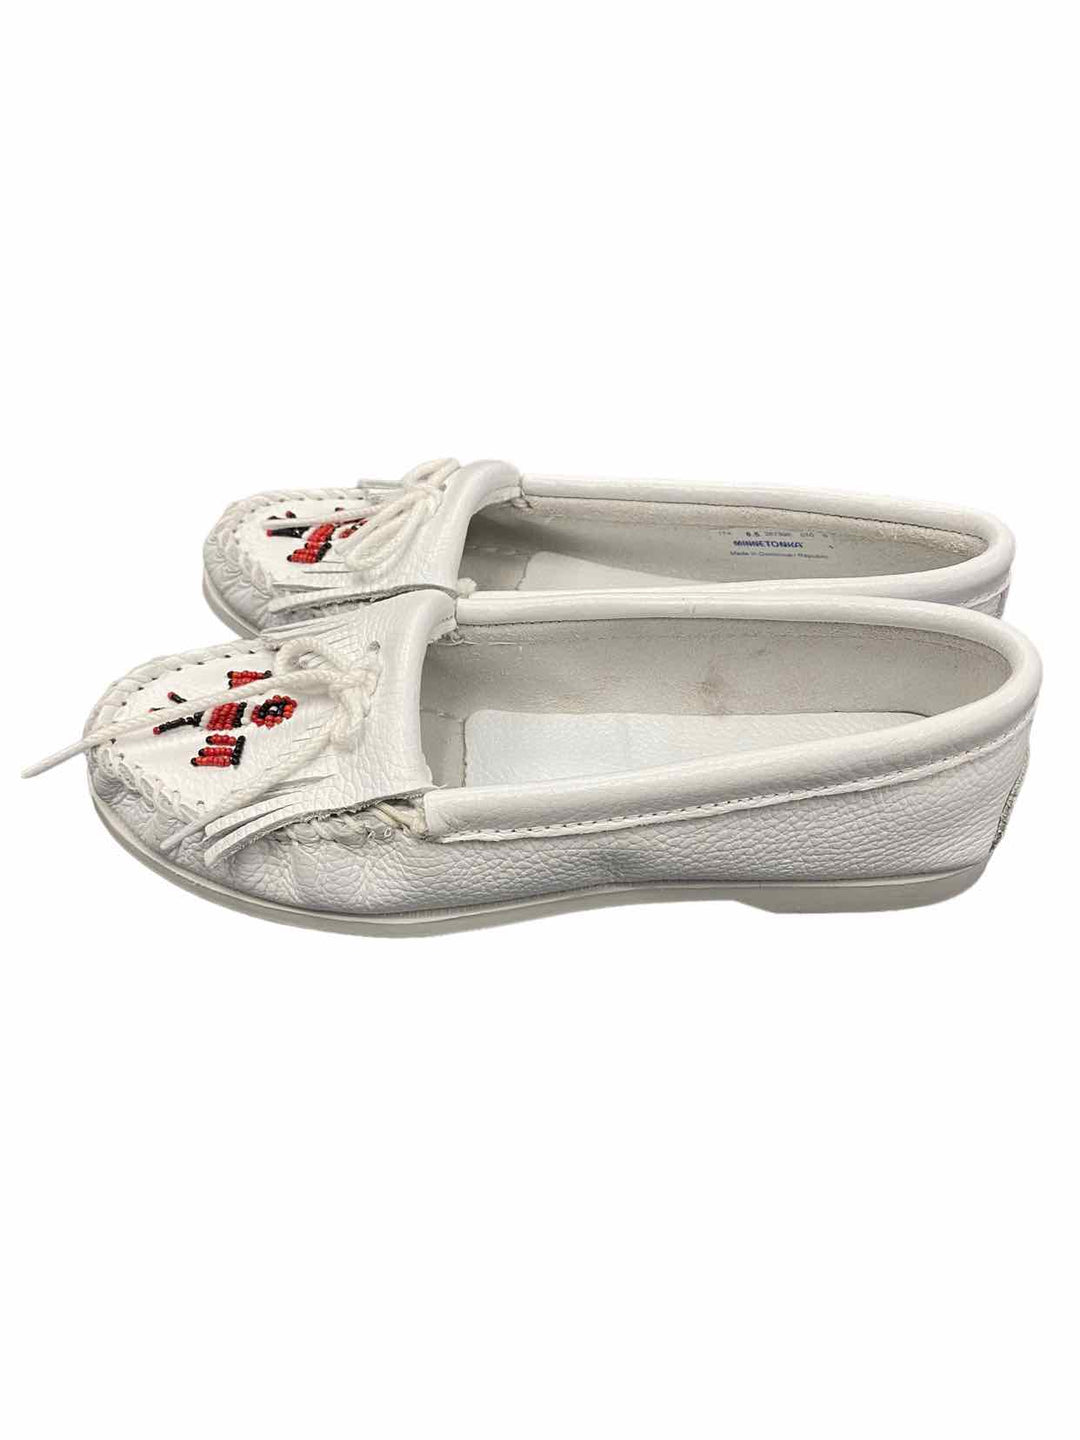 Minnetonka Shoe Size 8.5 White Flats